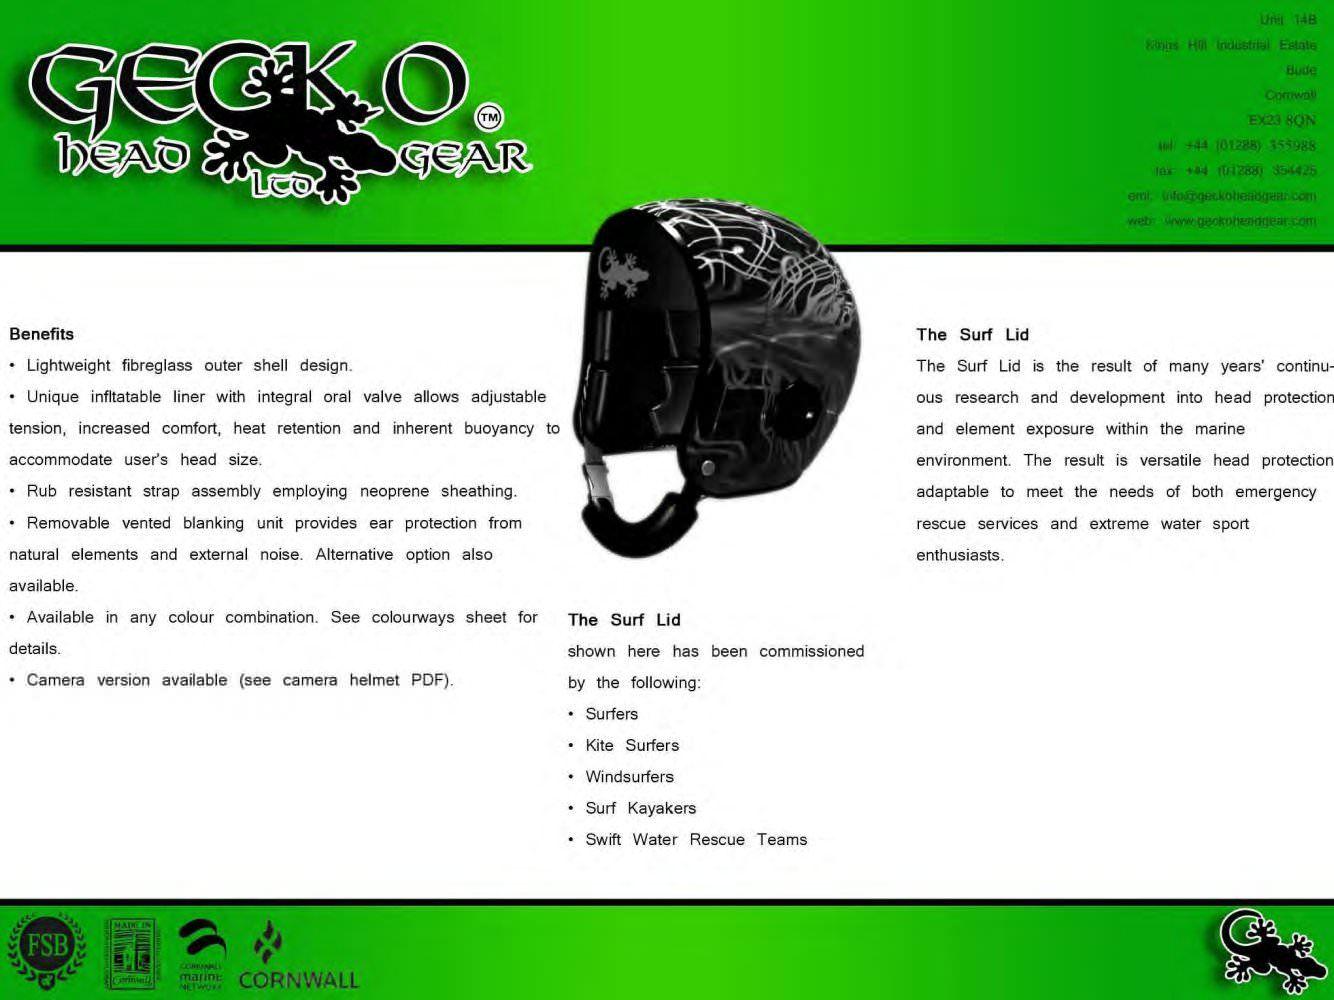 Gecko Surf Logo - The Gecko Surf Lid - Gecko Headgear - PDF Catalogues | Documentation ...